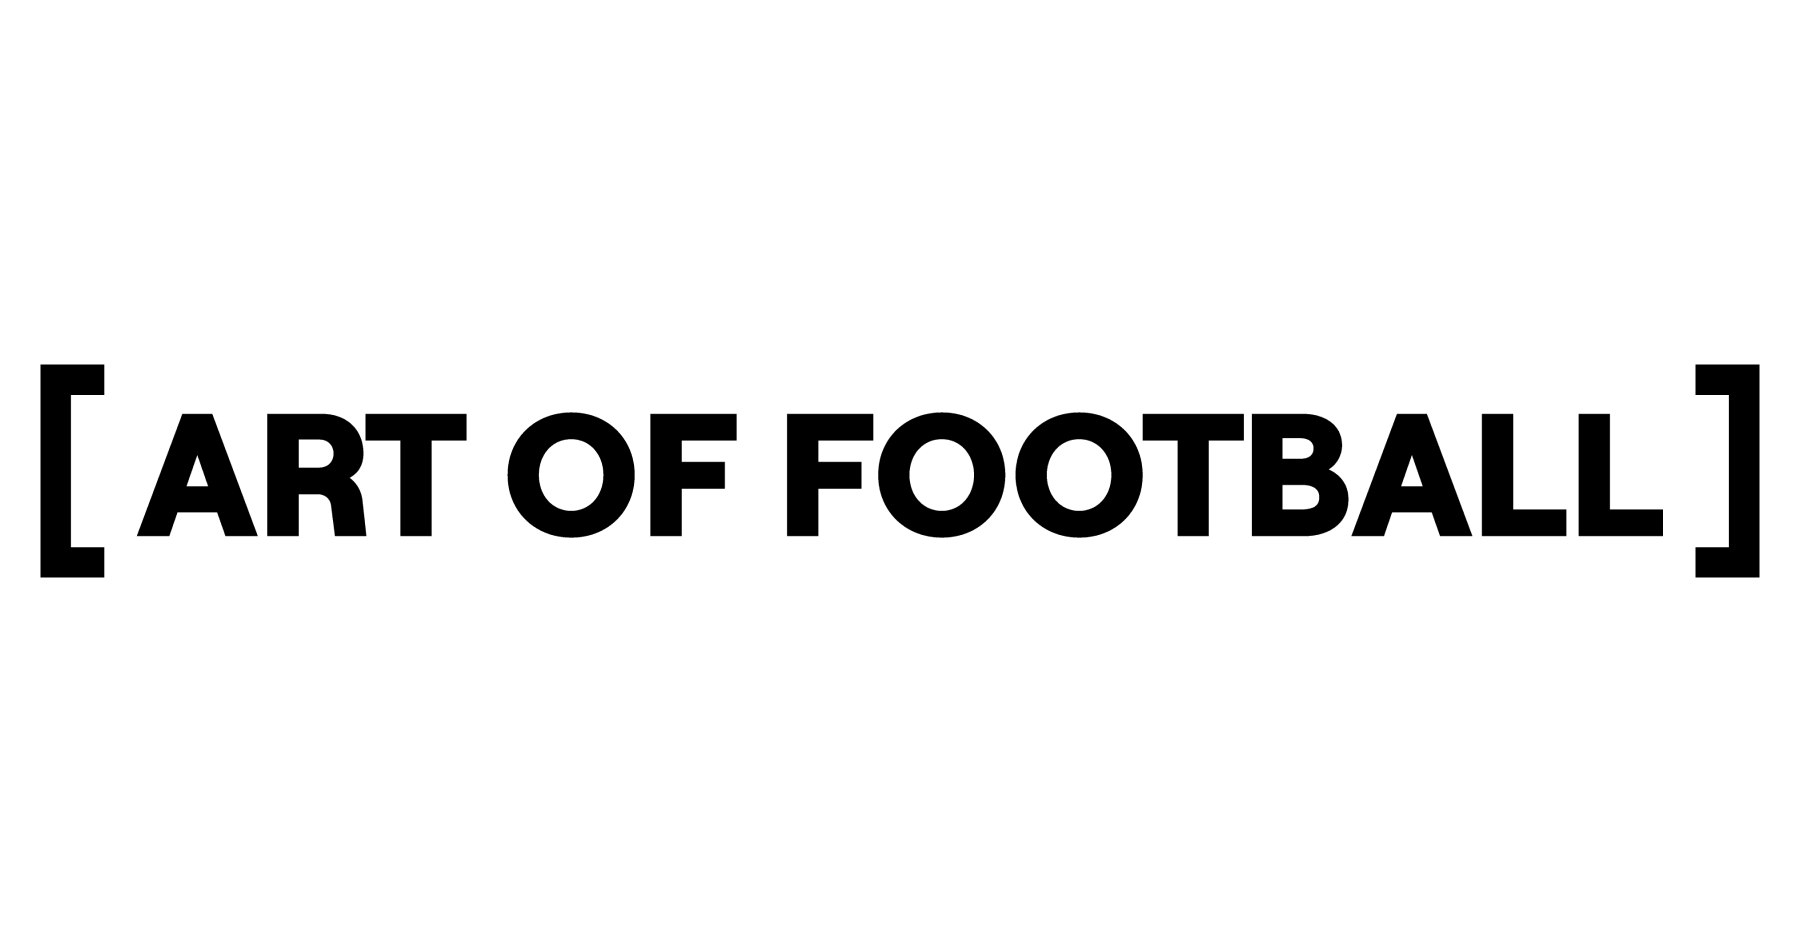 art-of-football.com